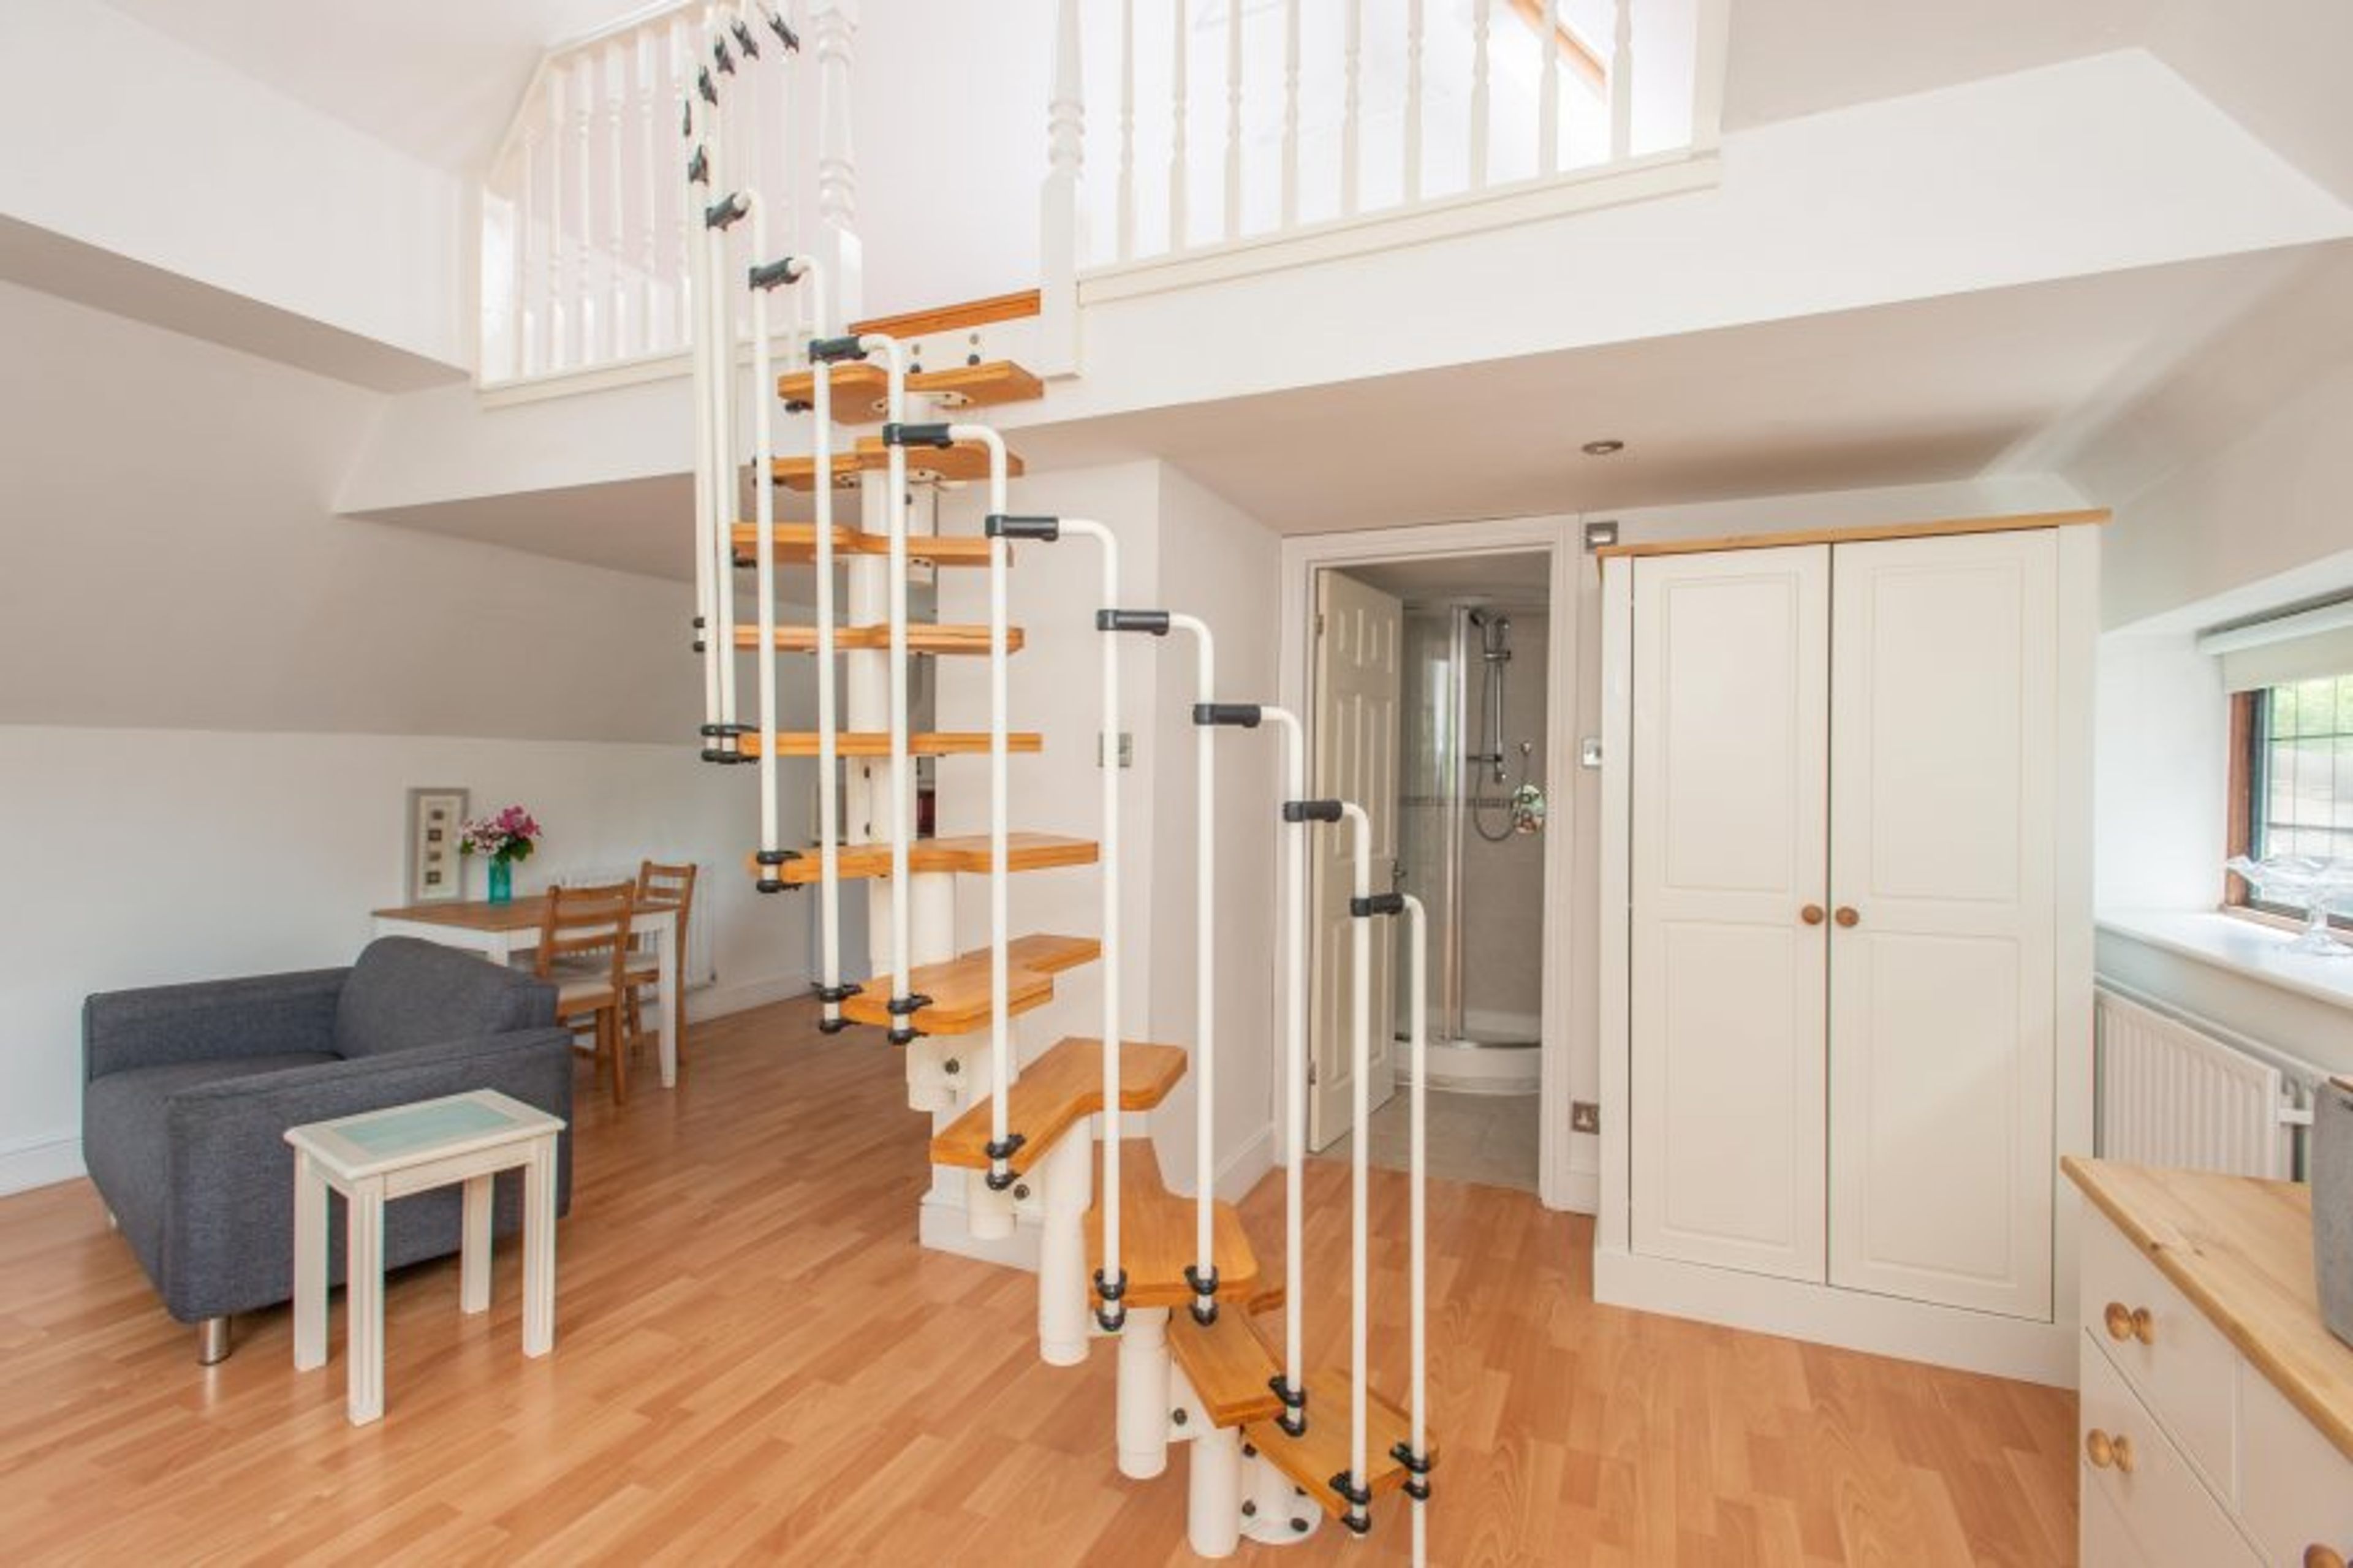 Spiral staircase to mezzanine bedroom.